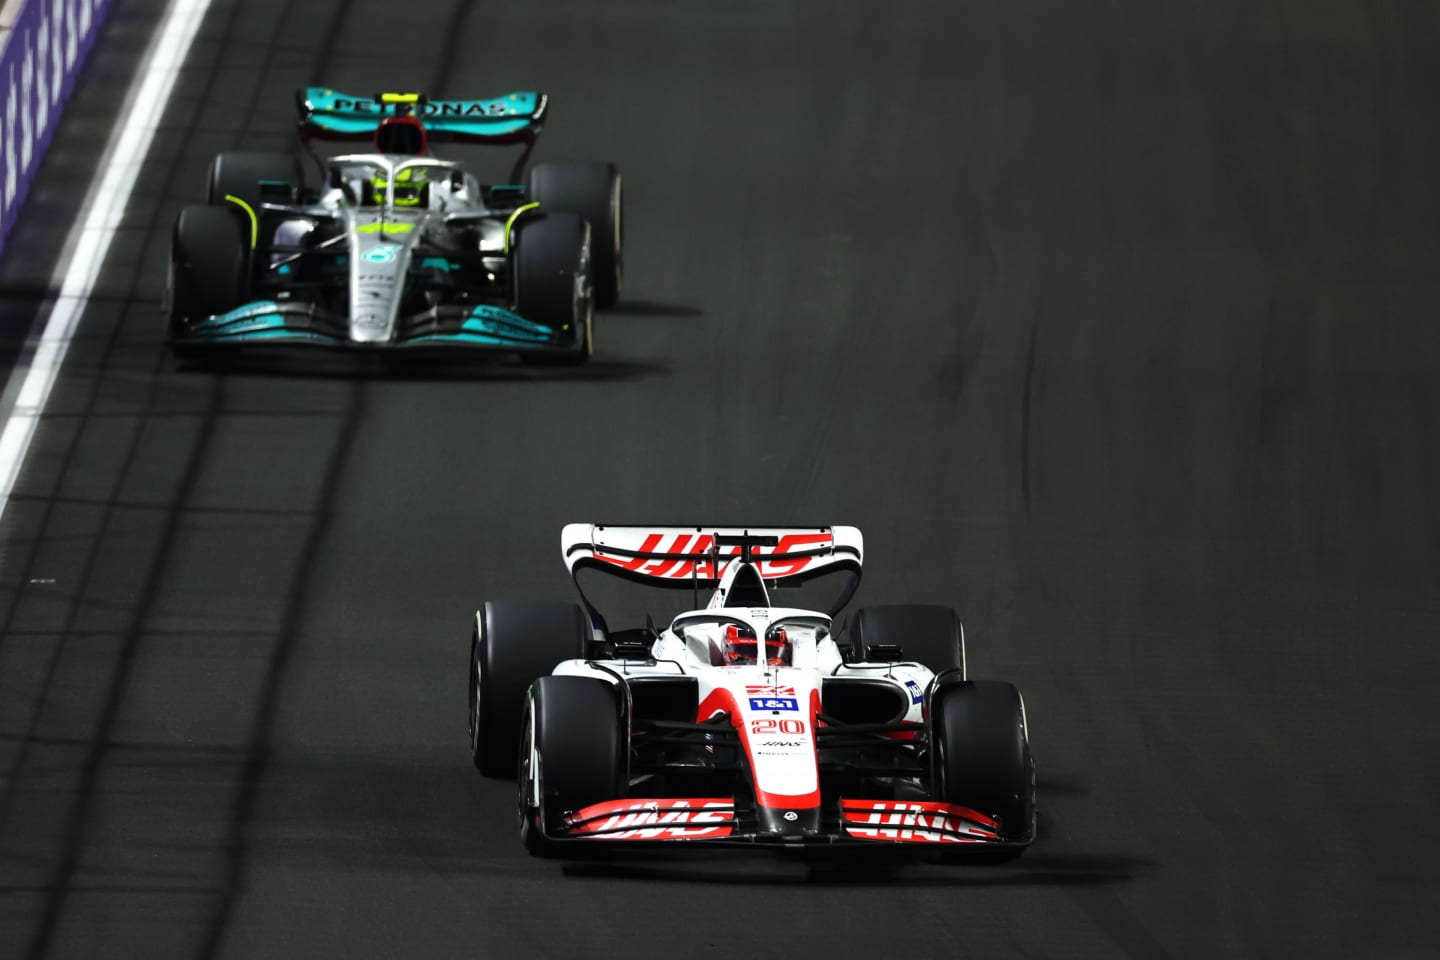 JEDDAH, SAUDI ARABIA - MARCH 27: Kevin Magnussen of Denmark driving the (20) Haas F1 VF-22 Ferrari